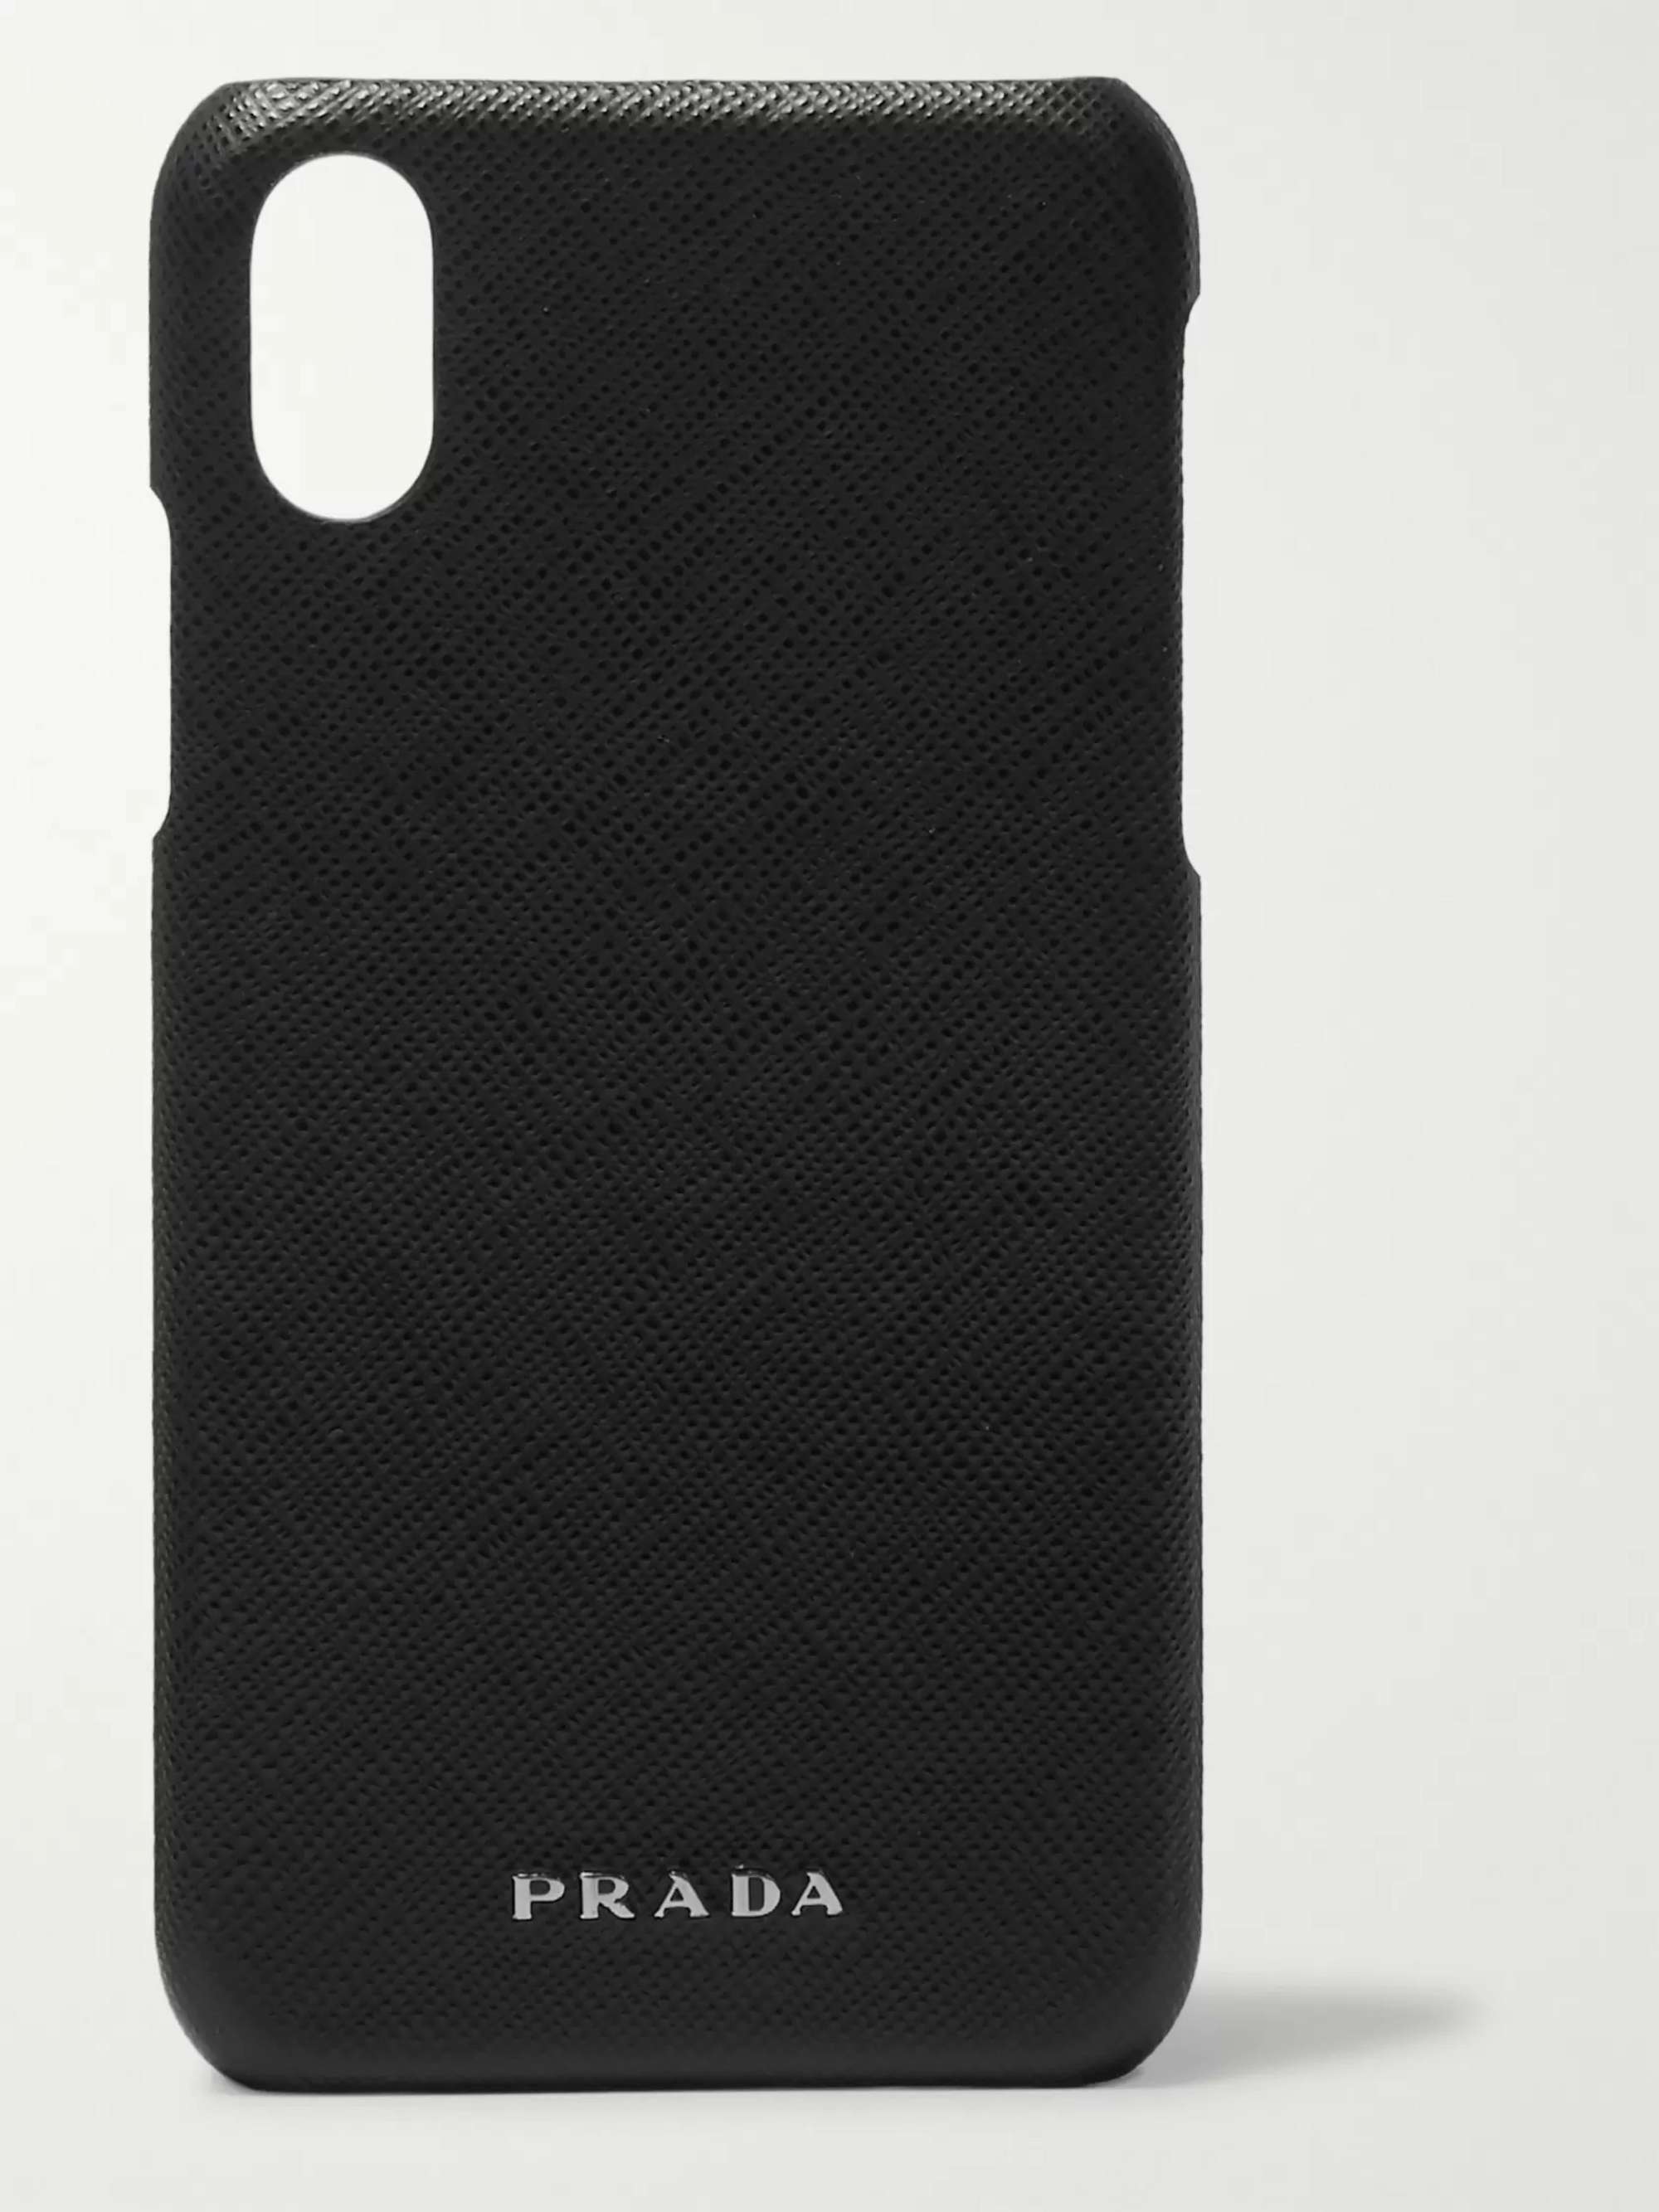 PRADA Saffiano Leather iPhone XS Case | MR PORTER